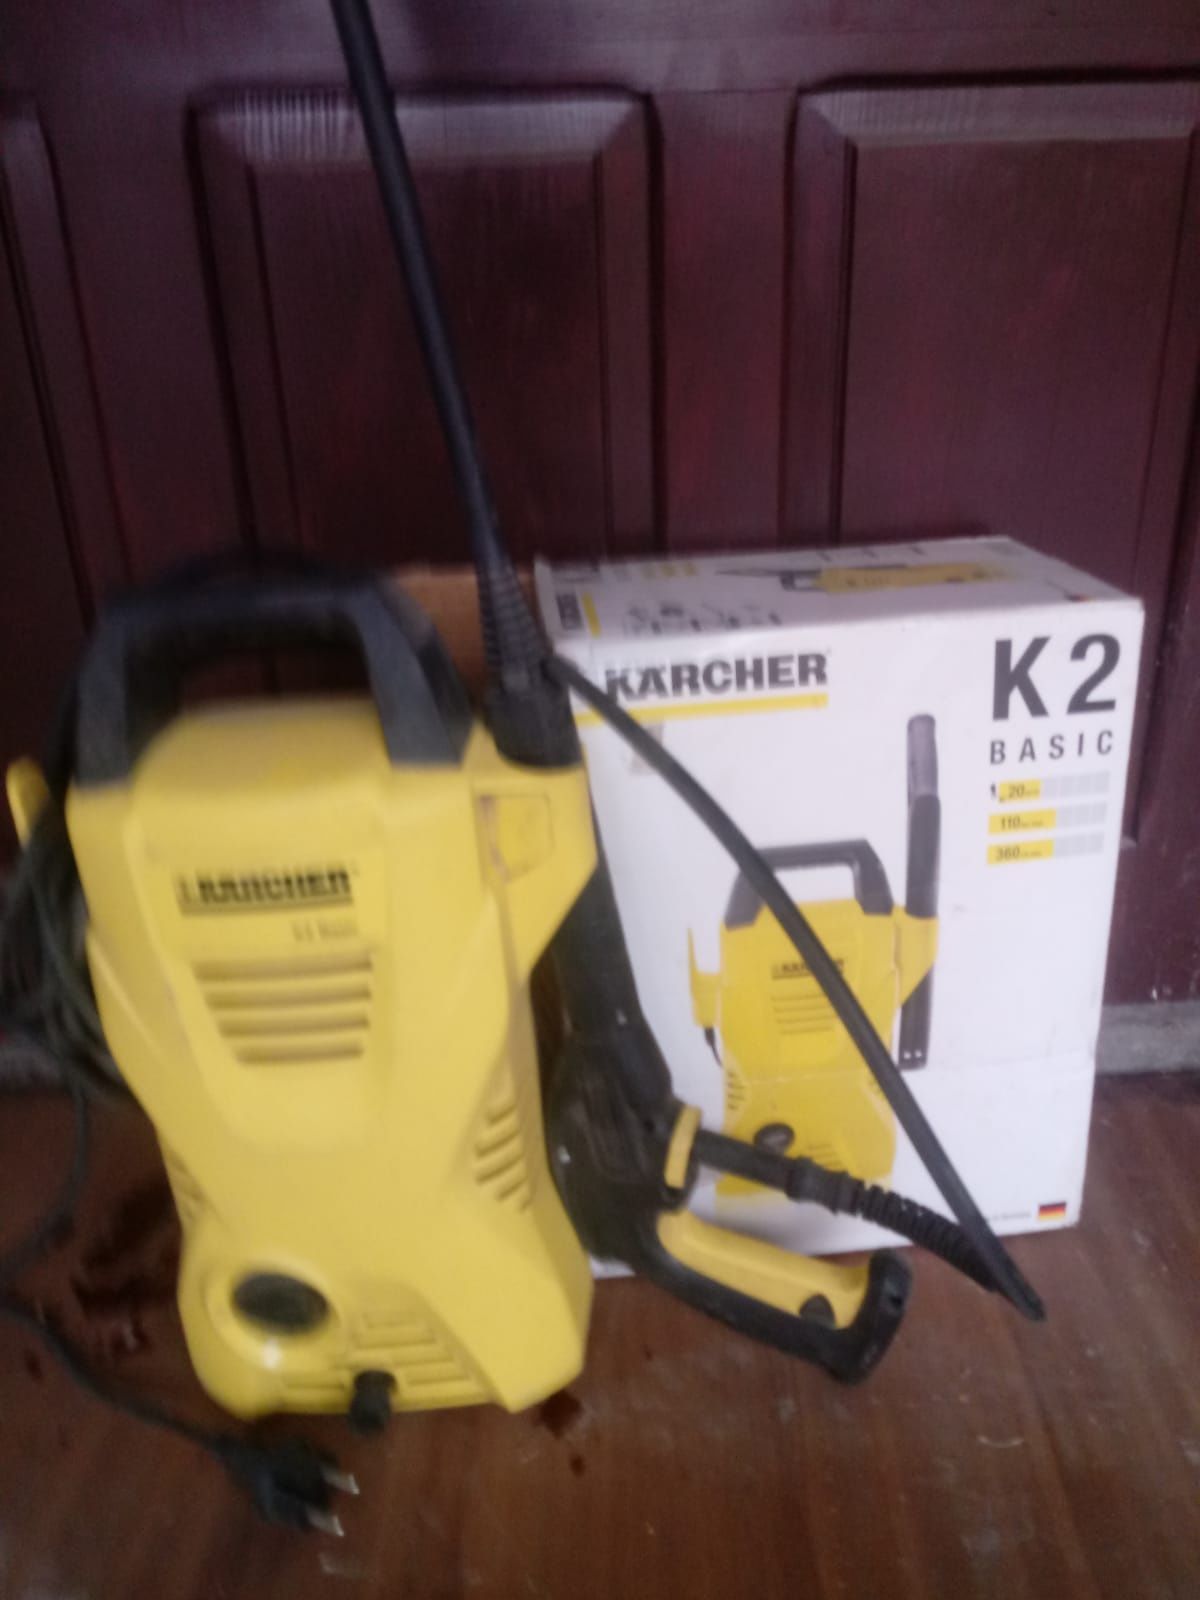 Karcher k2 basic